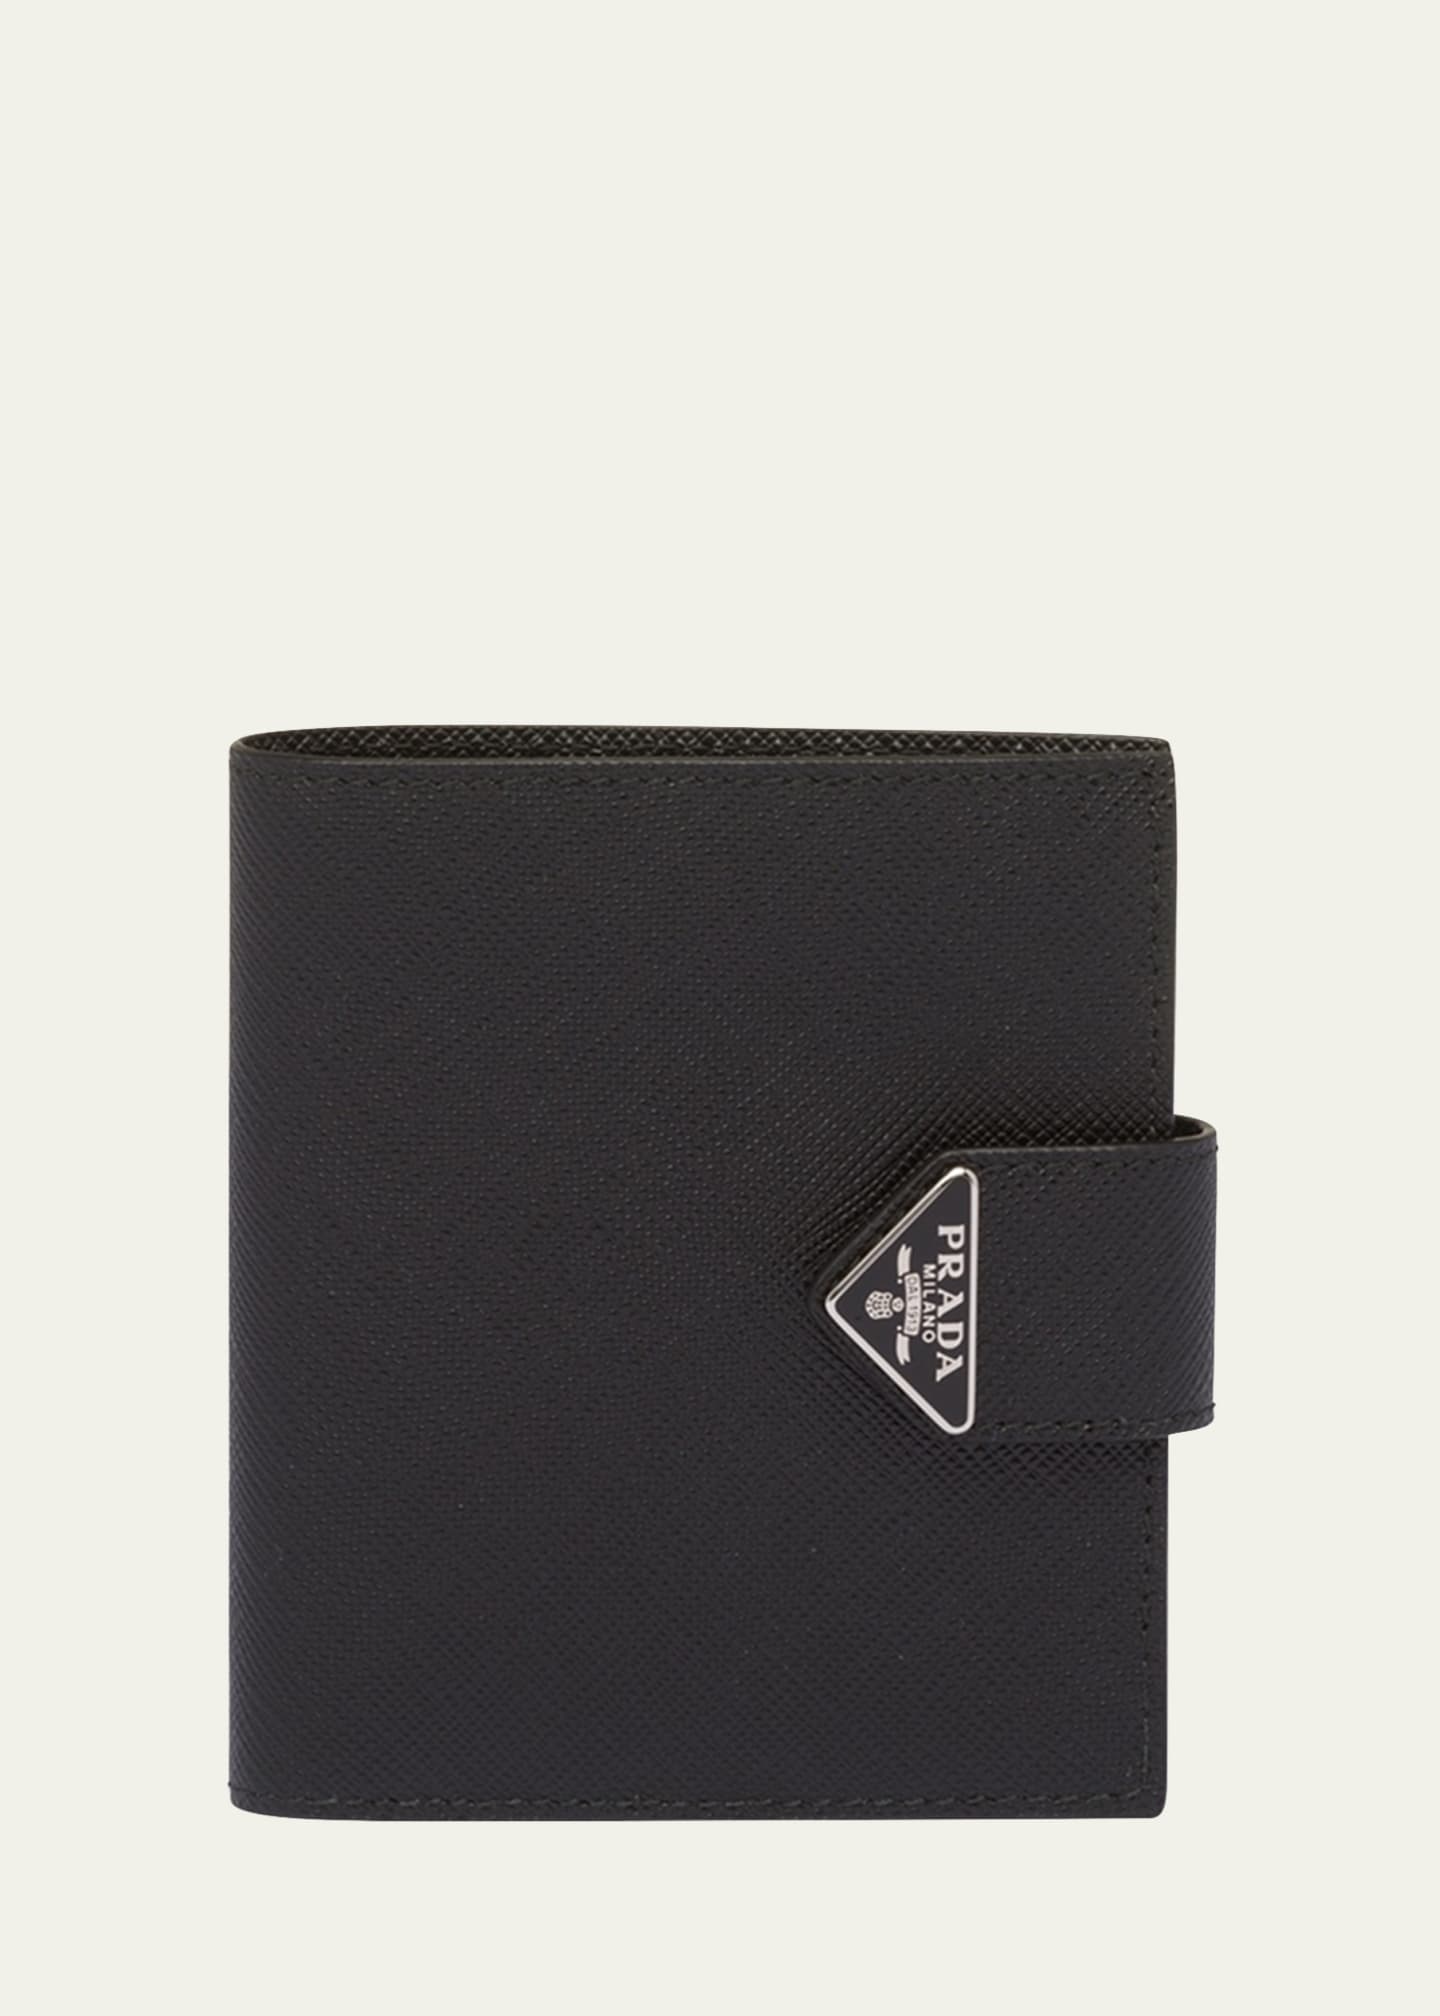 Prada Small Saffiano Leather Wallet on SALE